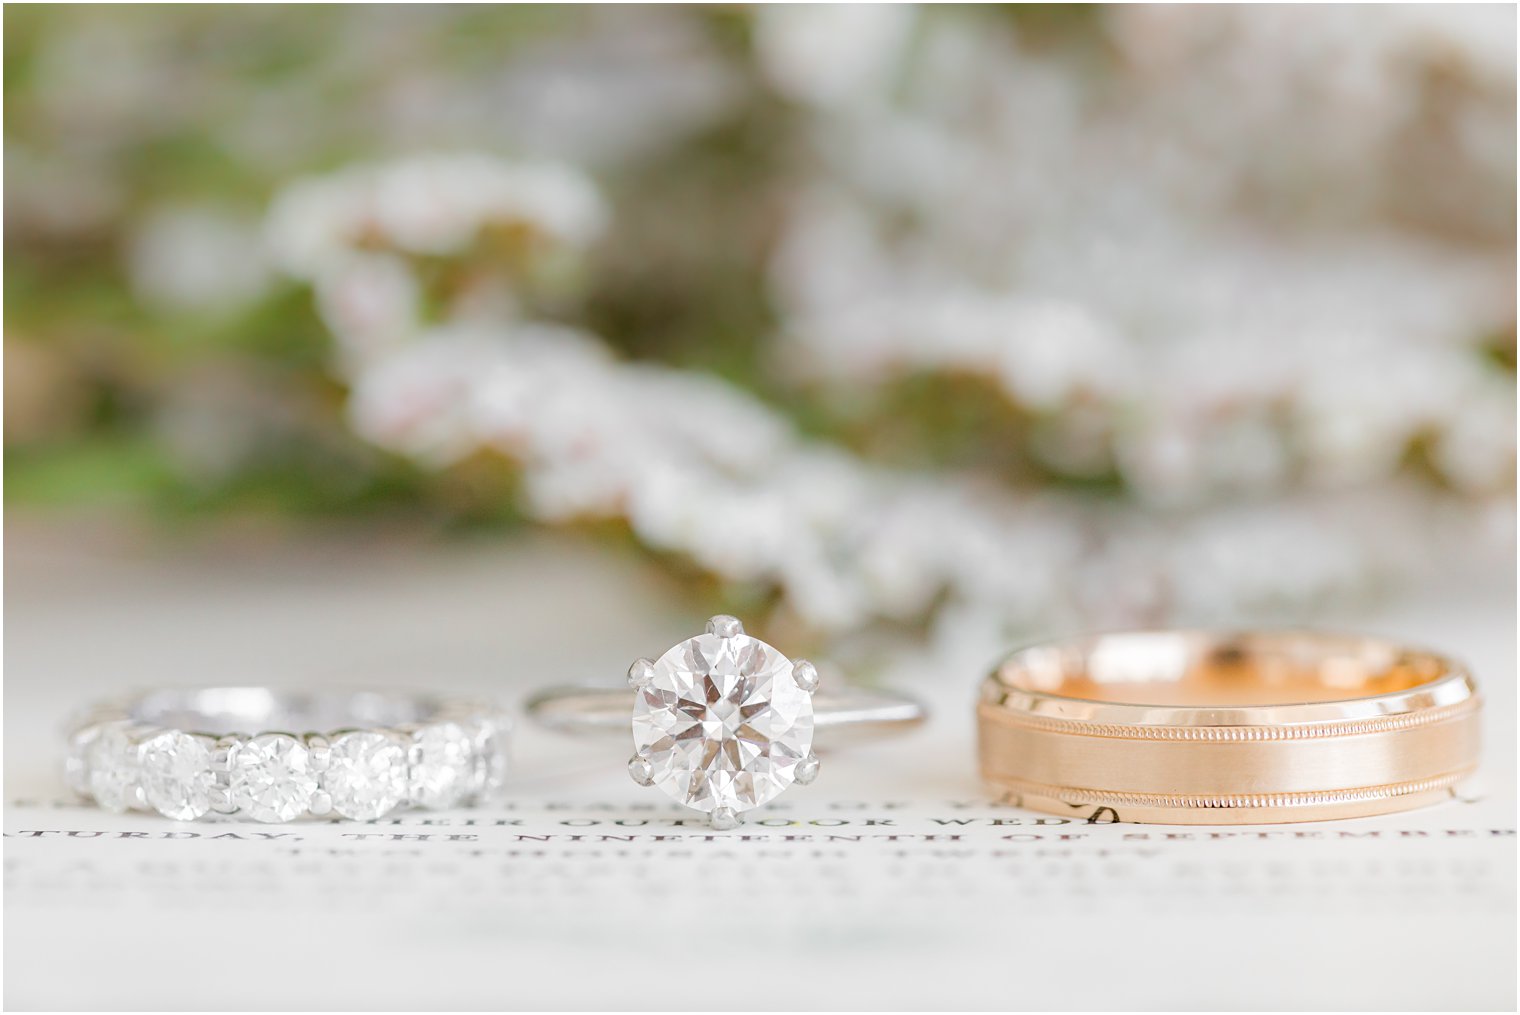 wedding rings sit on invitation before NJ wedding